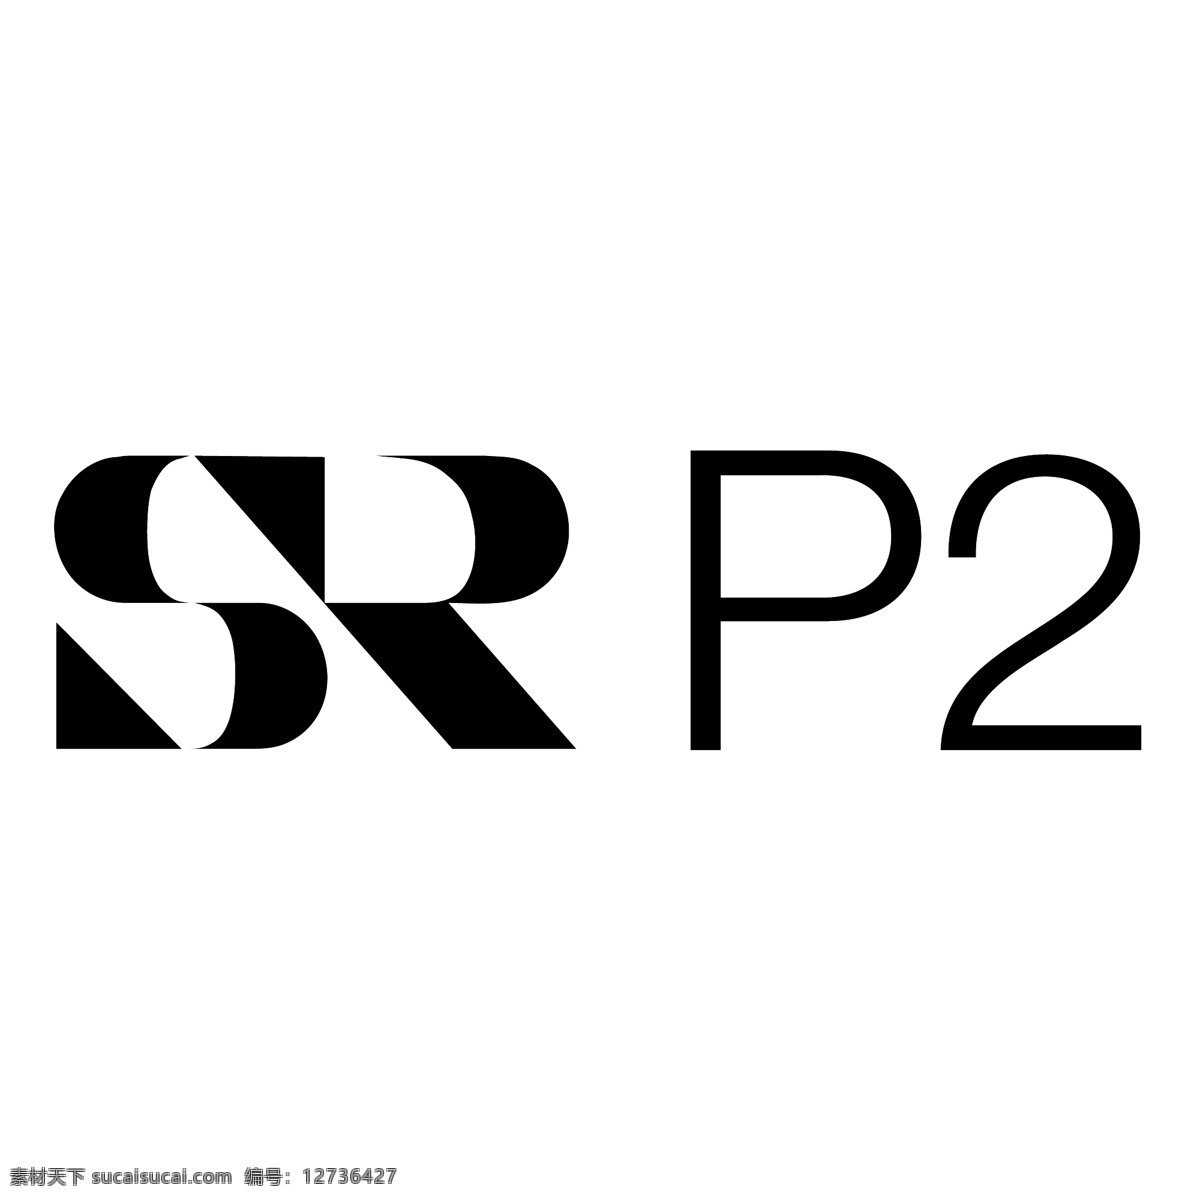 p2 sr免费下载 标识 公司 免费 品牌 品牌标识 商标 矢量标志下载 免费矢量标识 矢量 psd源文件 logo设计